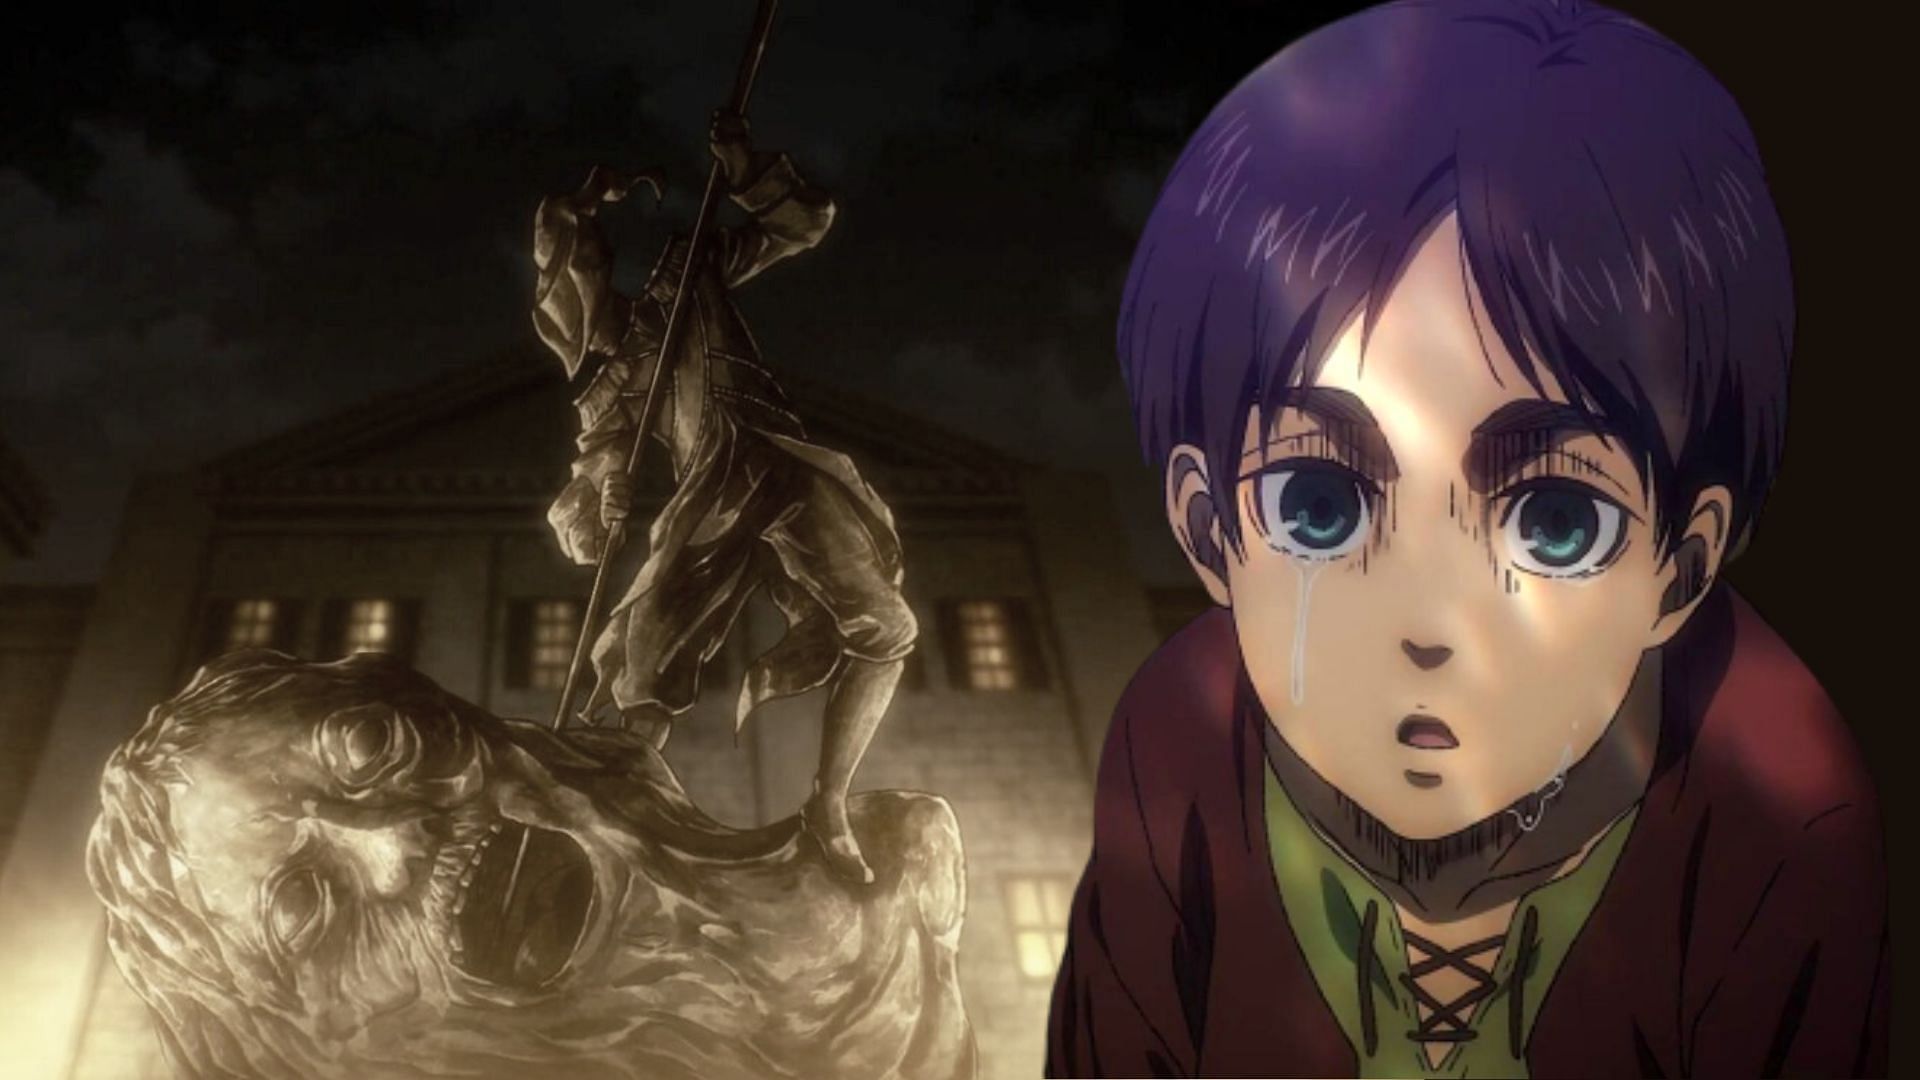 Attack on Titan Season 4 part 3 part 2 trailer reveals Mikasa's final words  to Eren